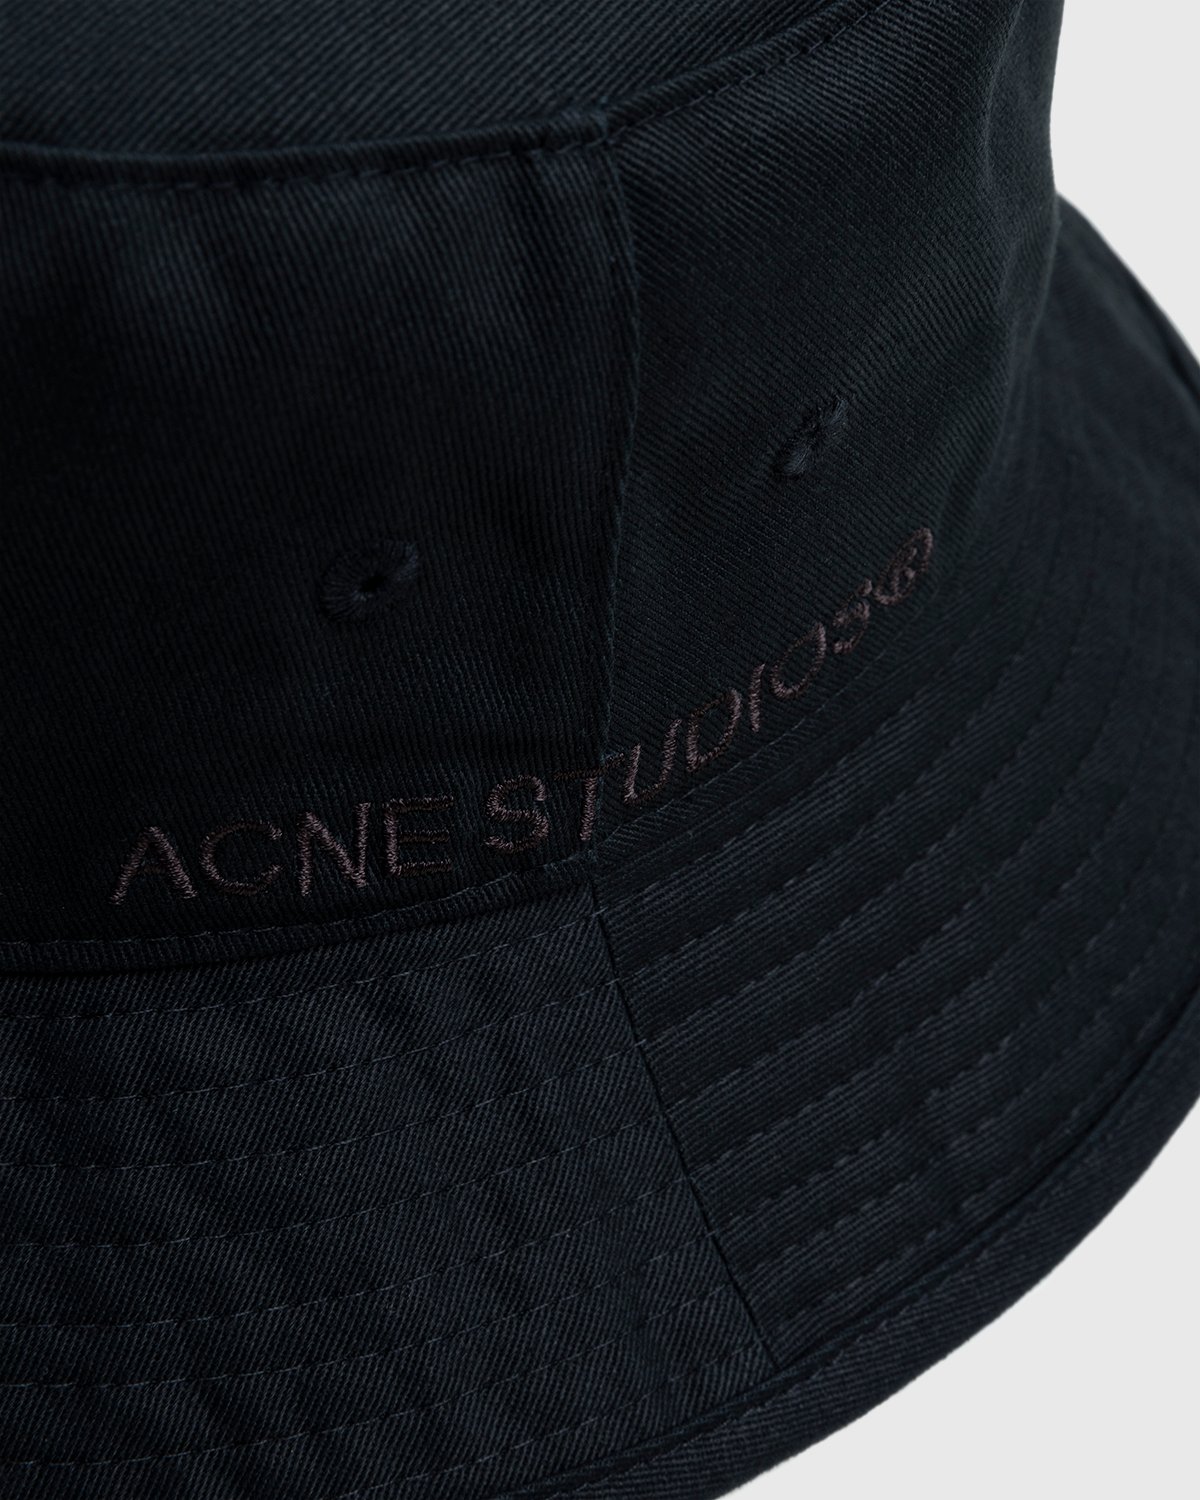 Acne Studios - Twill Bucket Hat Black - Accessories - Black - Image 3